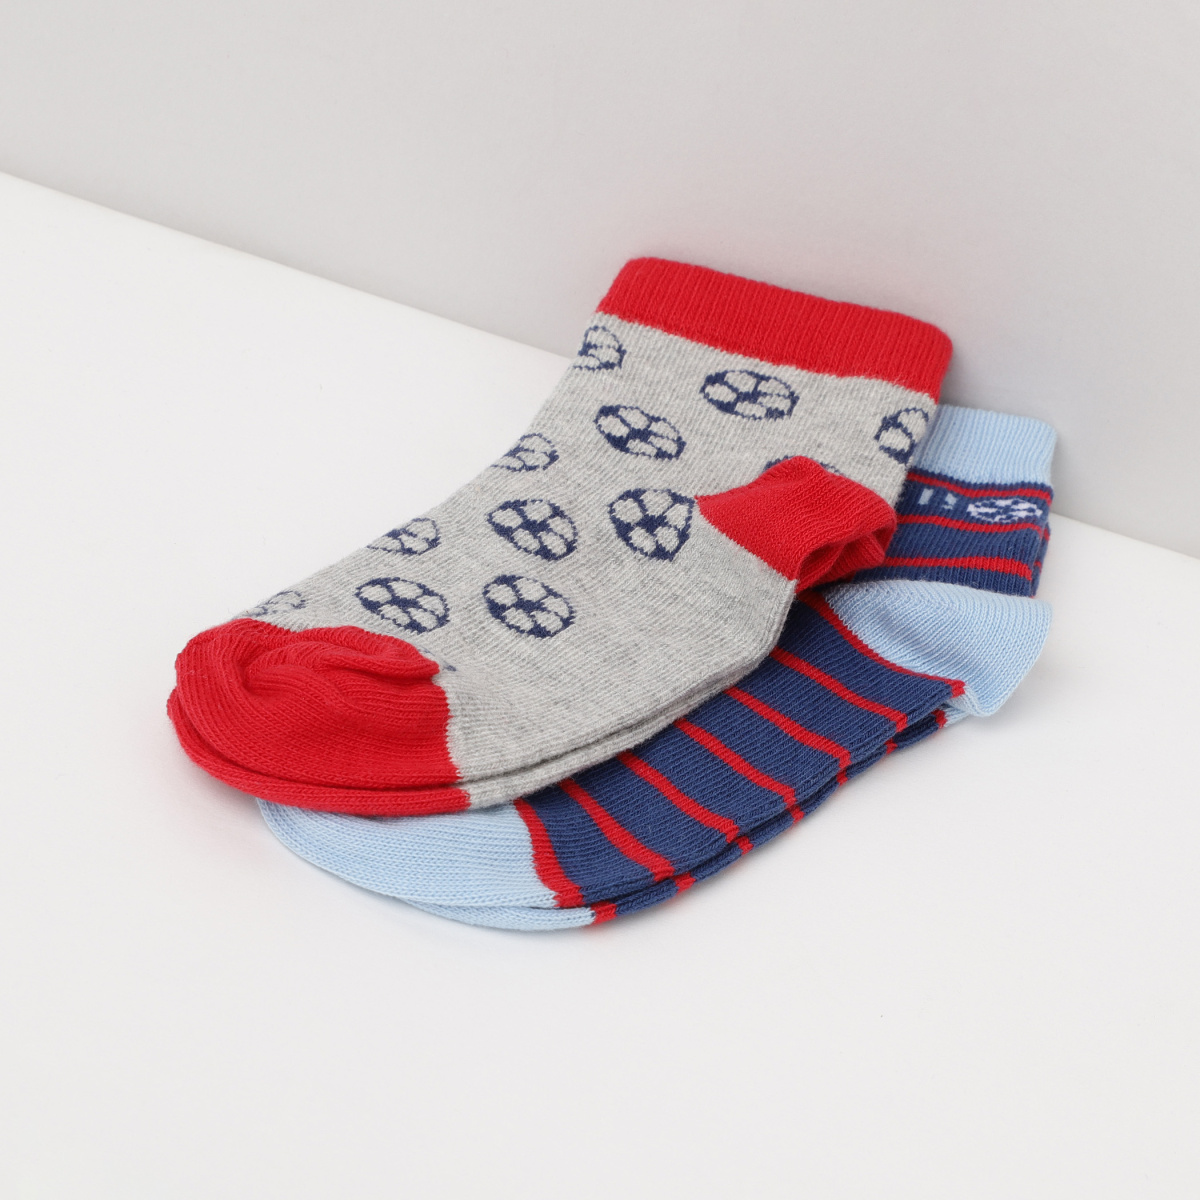 MAX Patterned Socks - Set of 2